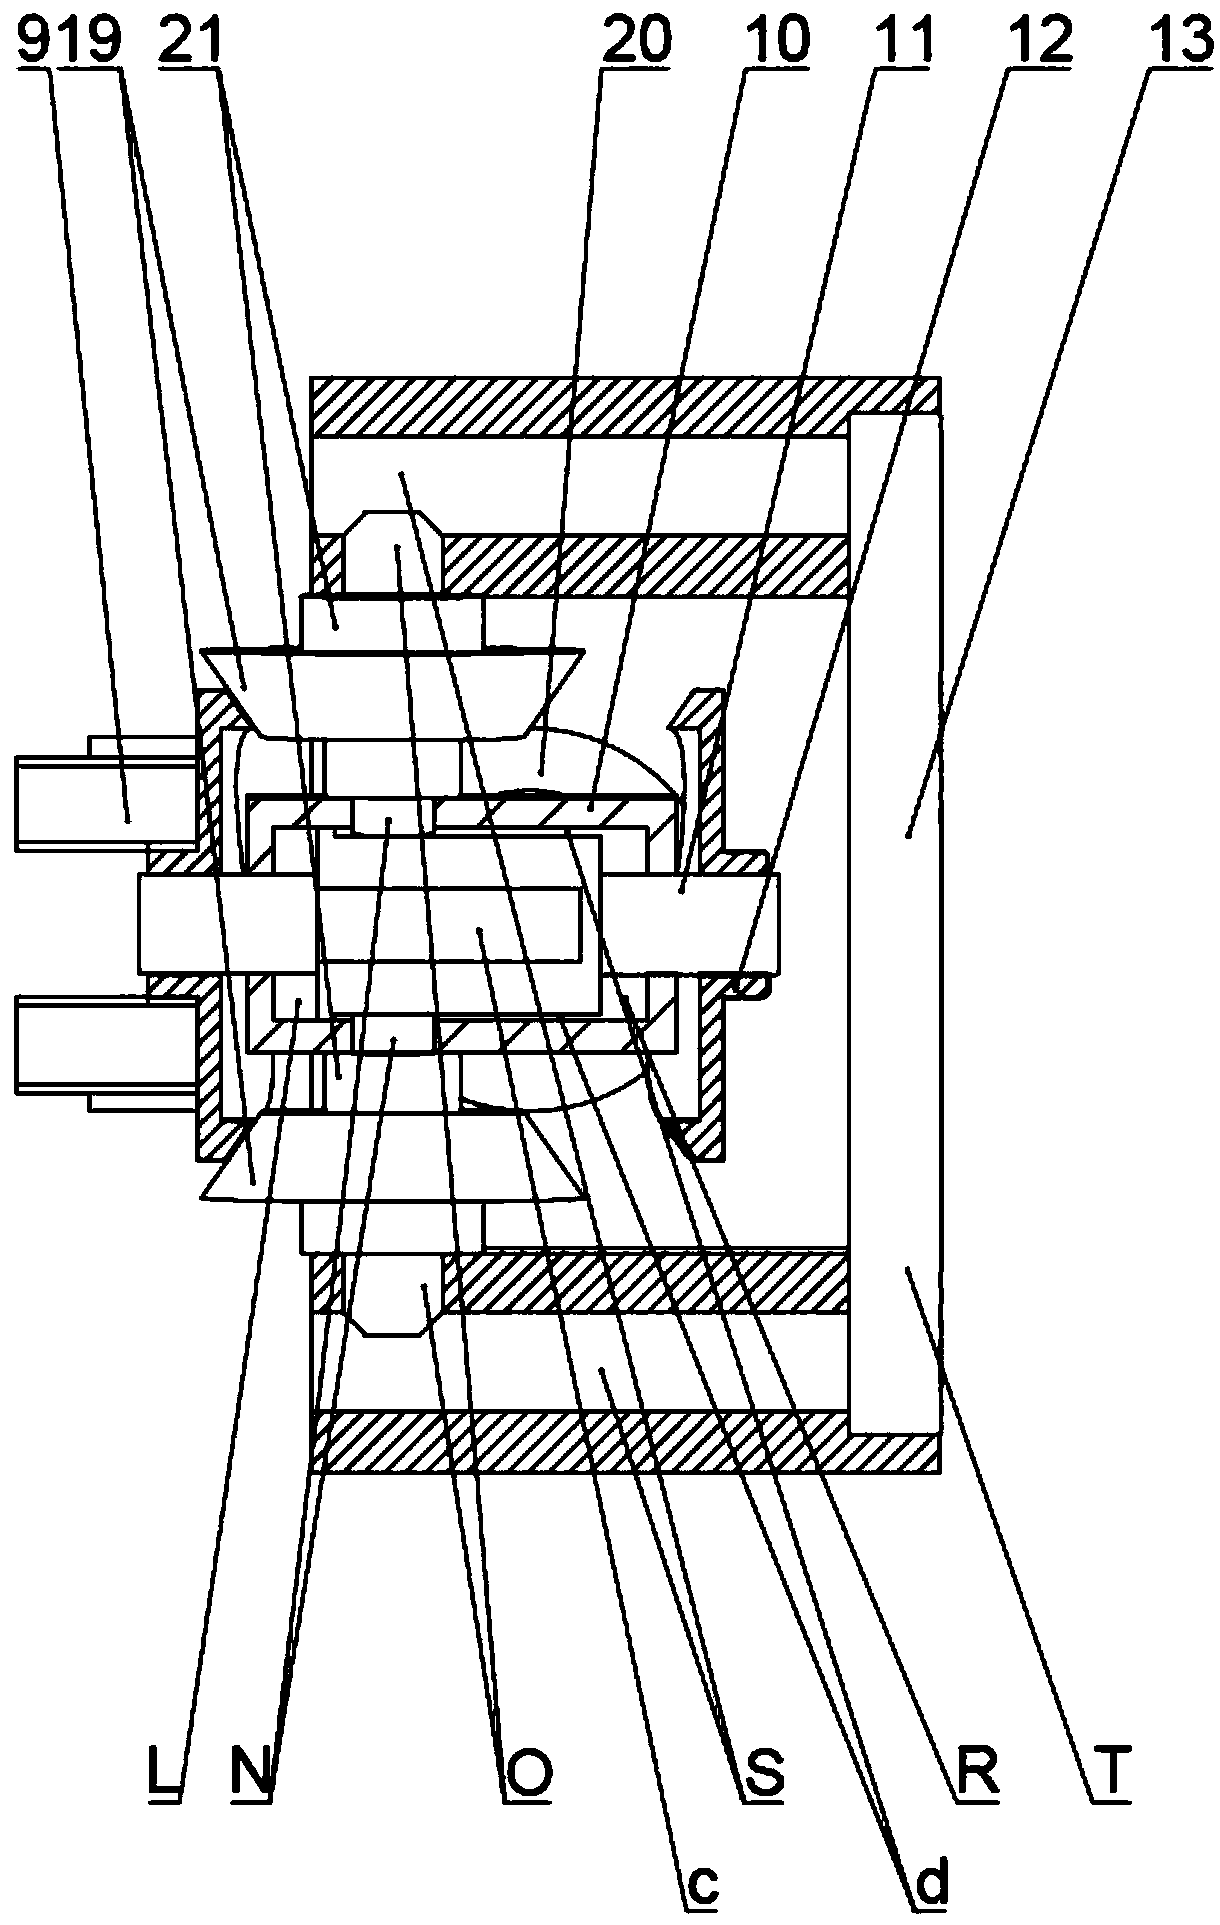 Movable guide rail type flowmeter